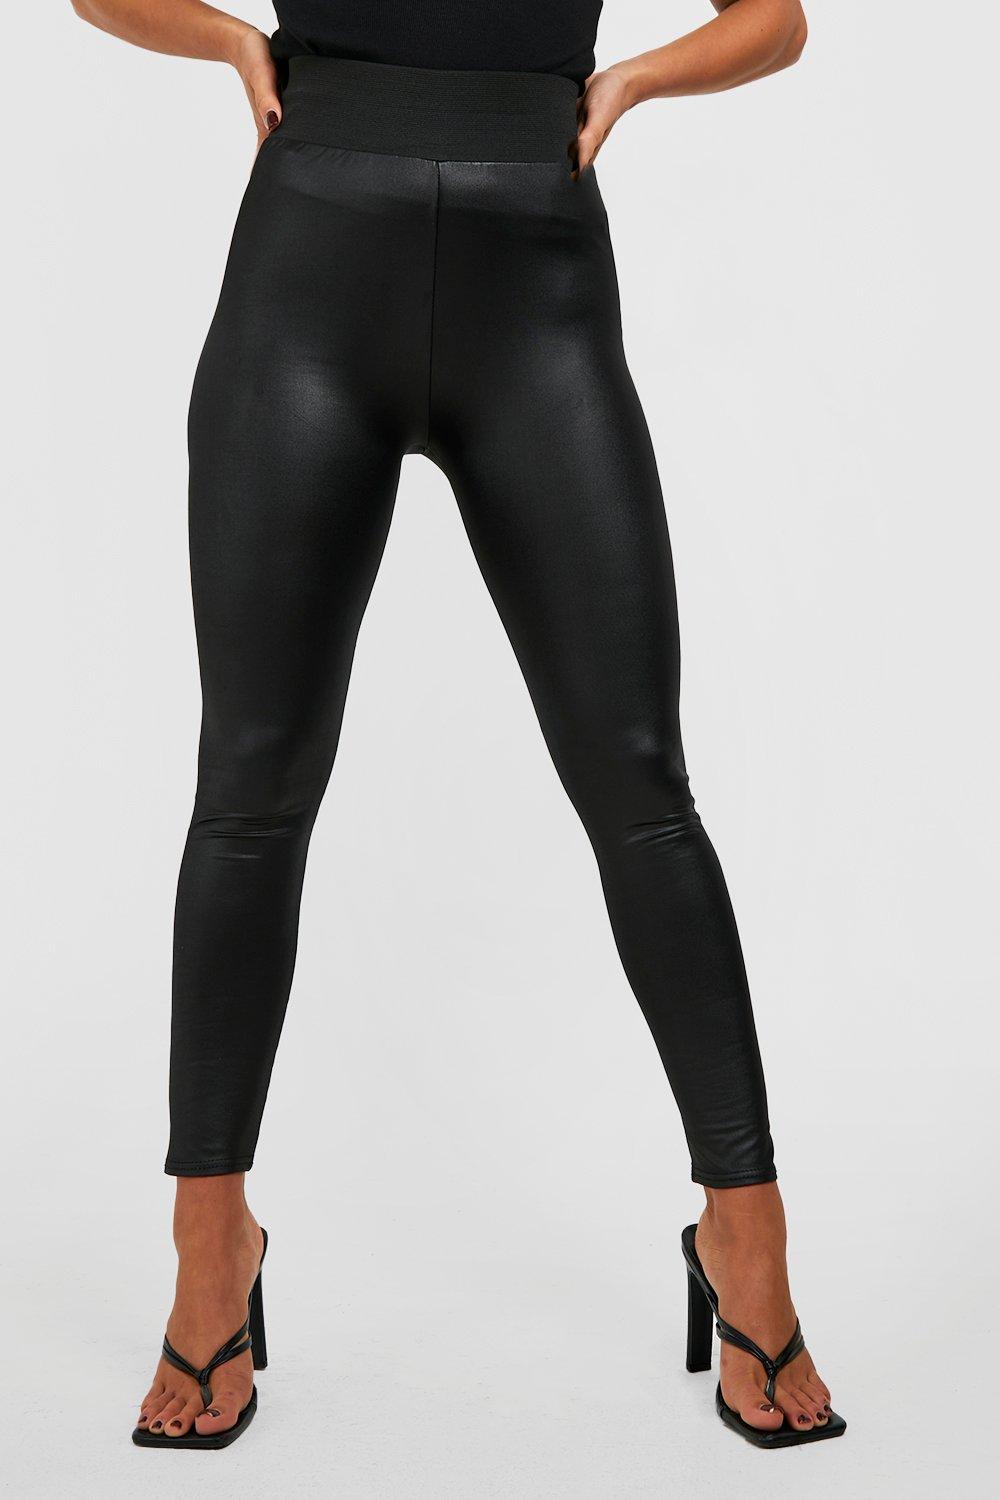 https://media.boohoo.com/i/boohoo/gzz41816_black_xl_3/female-black-deep-elastic-waist-shaping-faux-leather-leggings